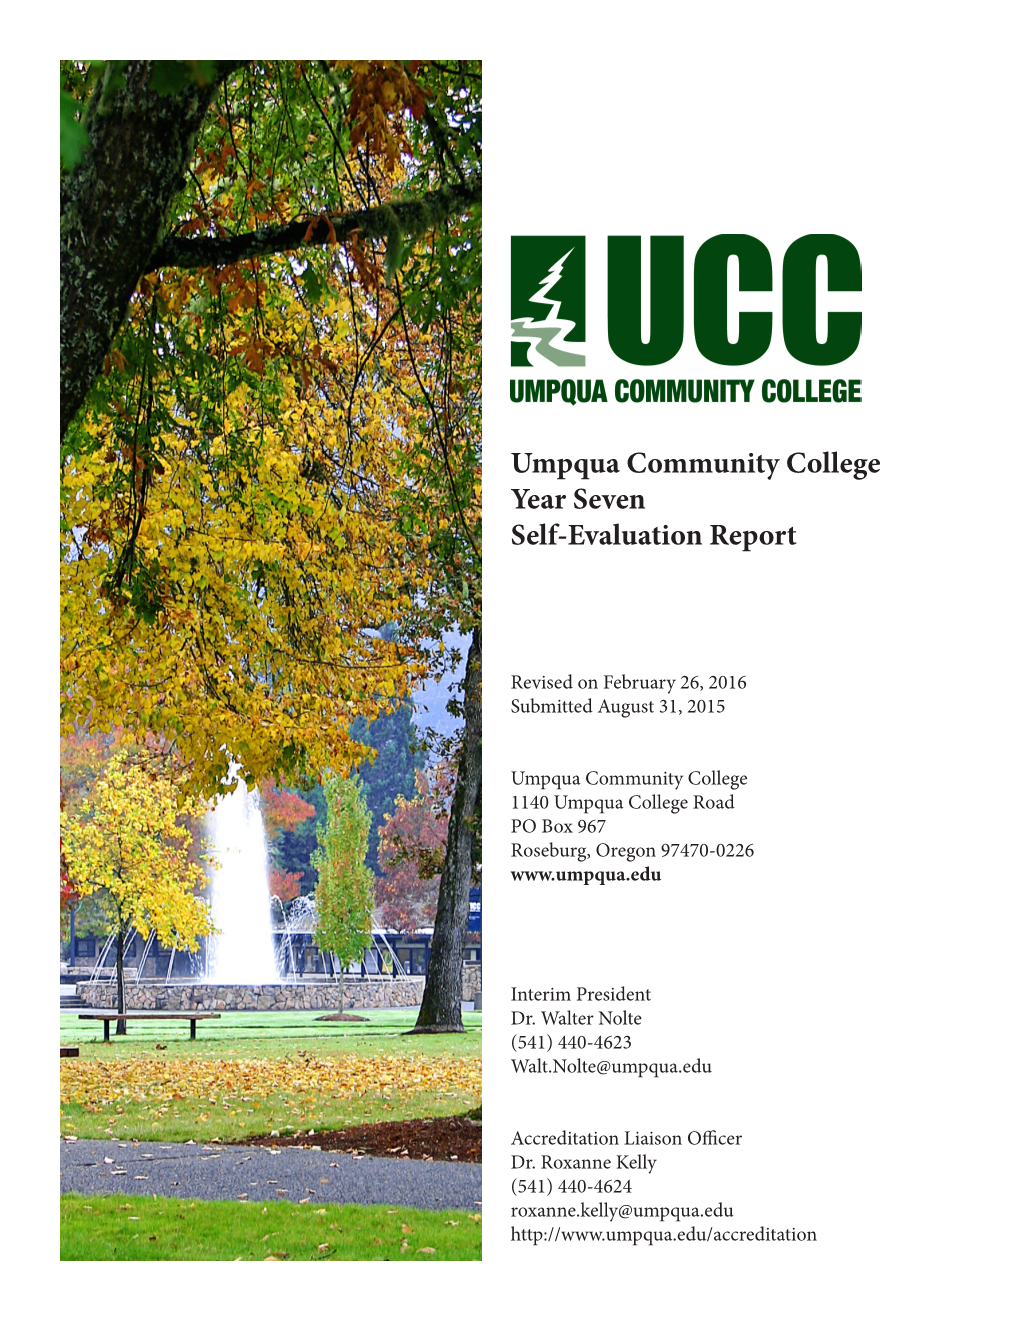 Umpqua Community College Year Seven Self-Evaluation Report